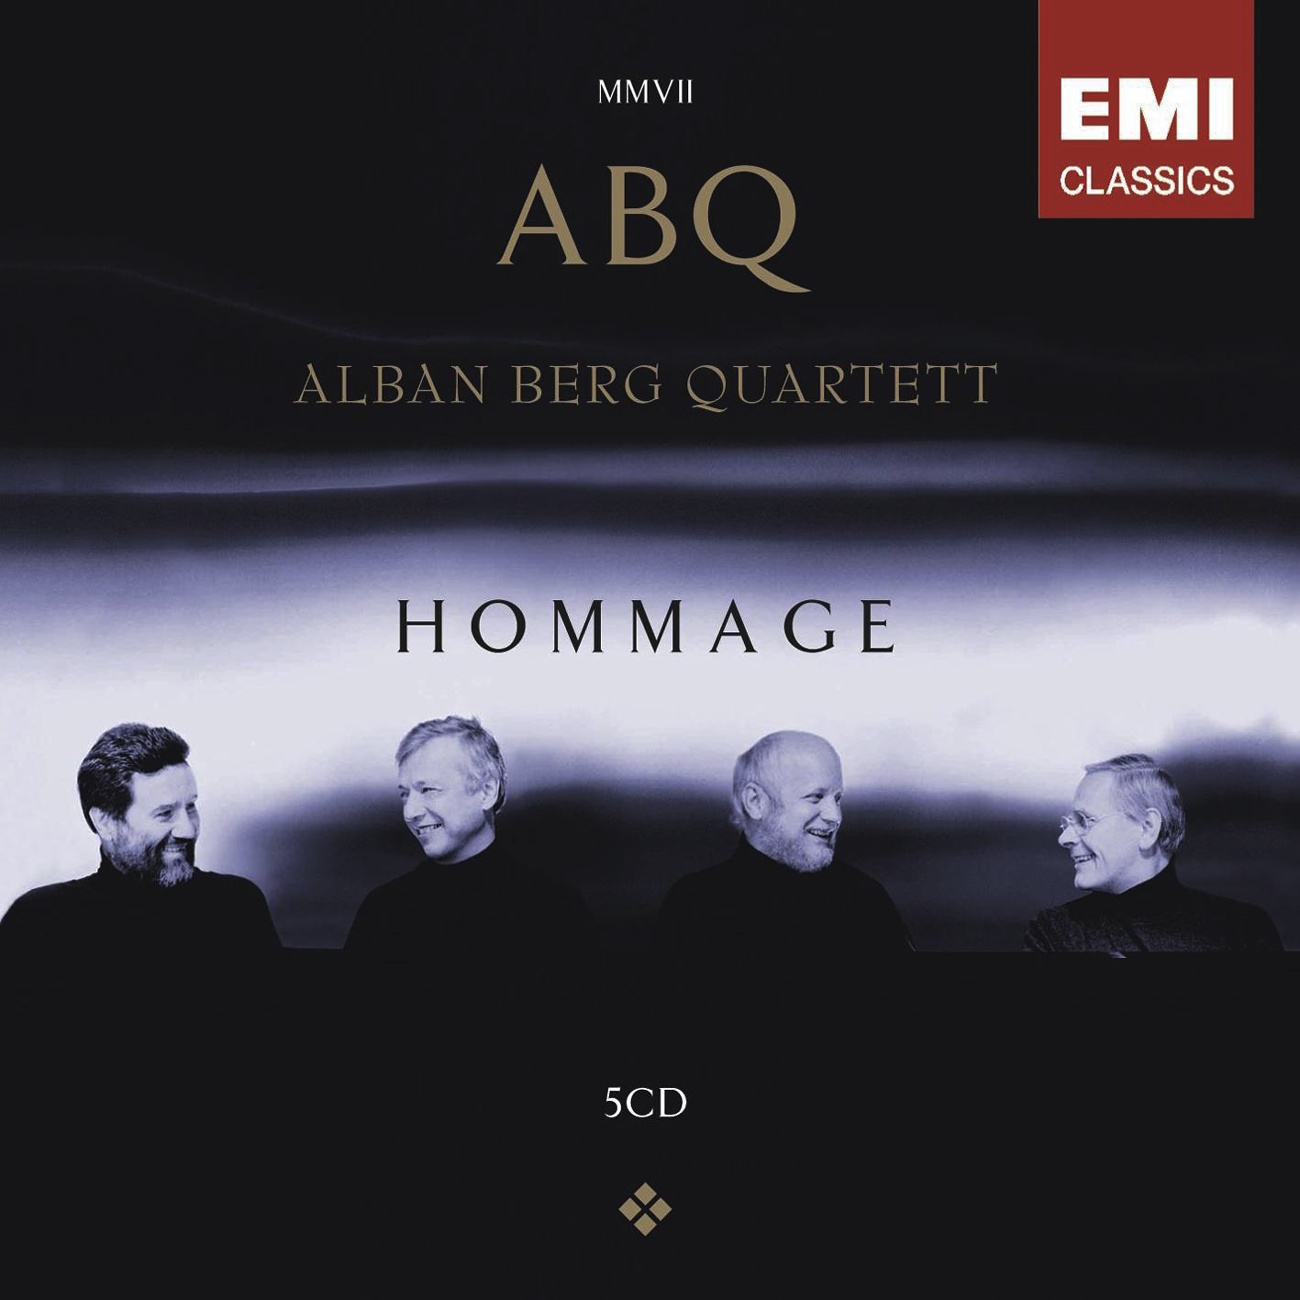 String Quartet No. 15 in G Major, D.887: III. Scherzo (Allegro vivace) & Trio (Allegretto)